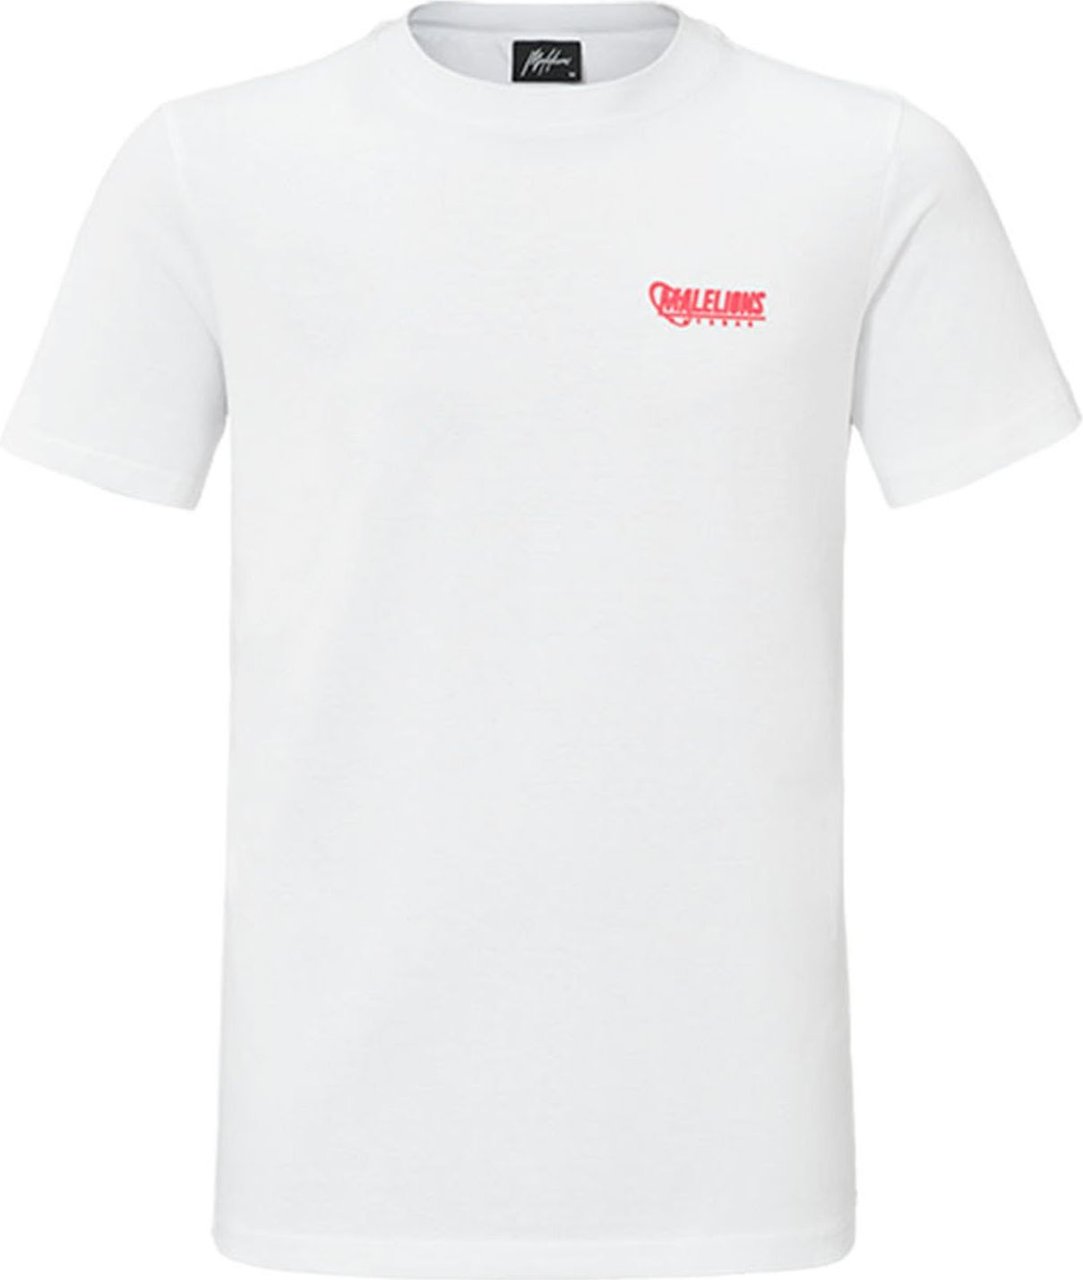 Malelions Pays Bas T-Shirt - White/Orange Wit